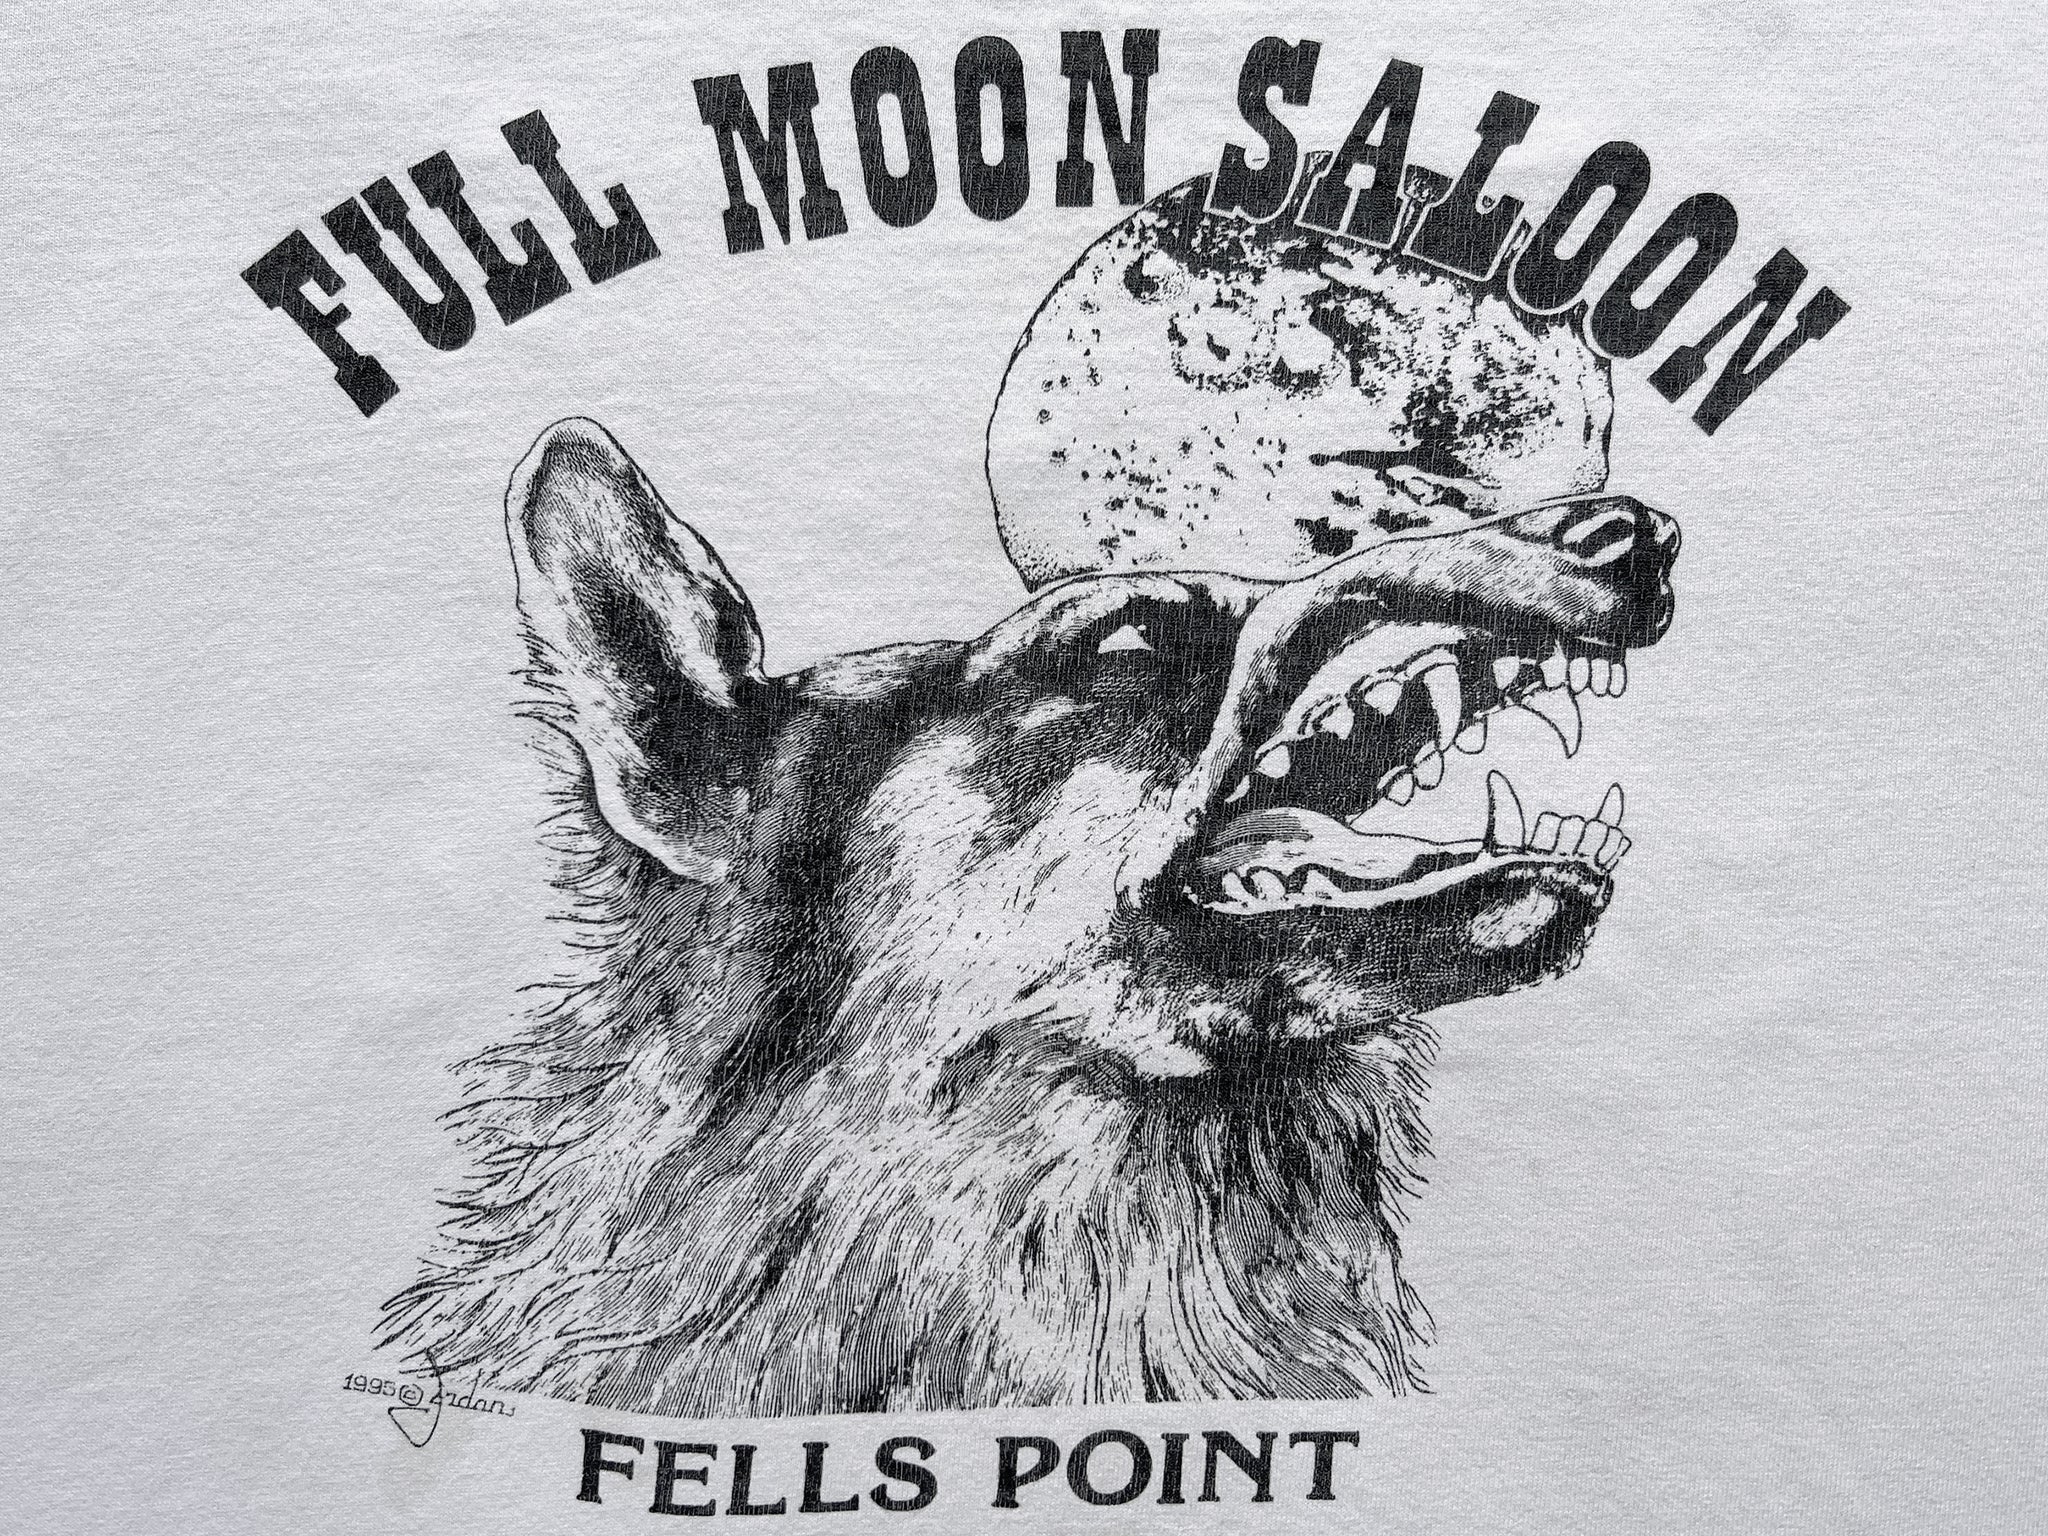 Full Moon Saloon T-Shirt